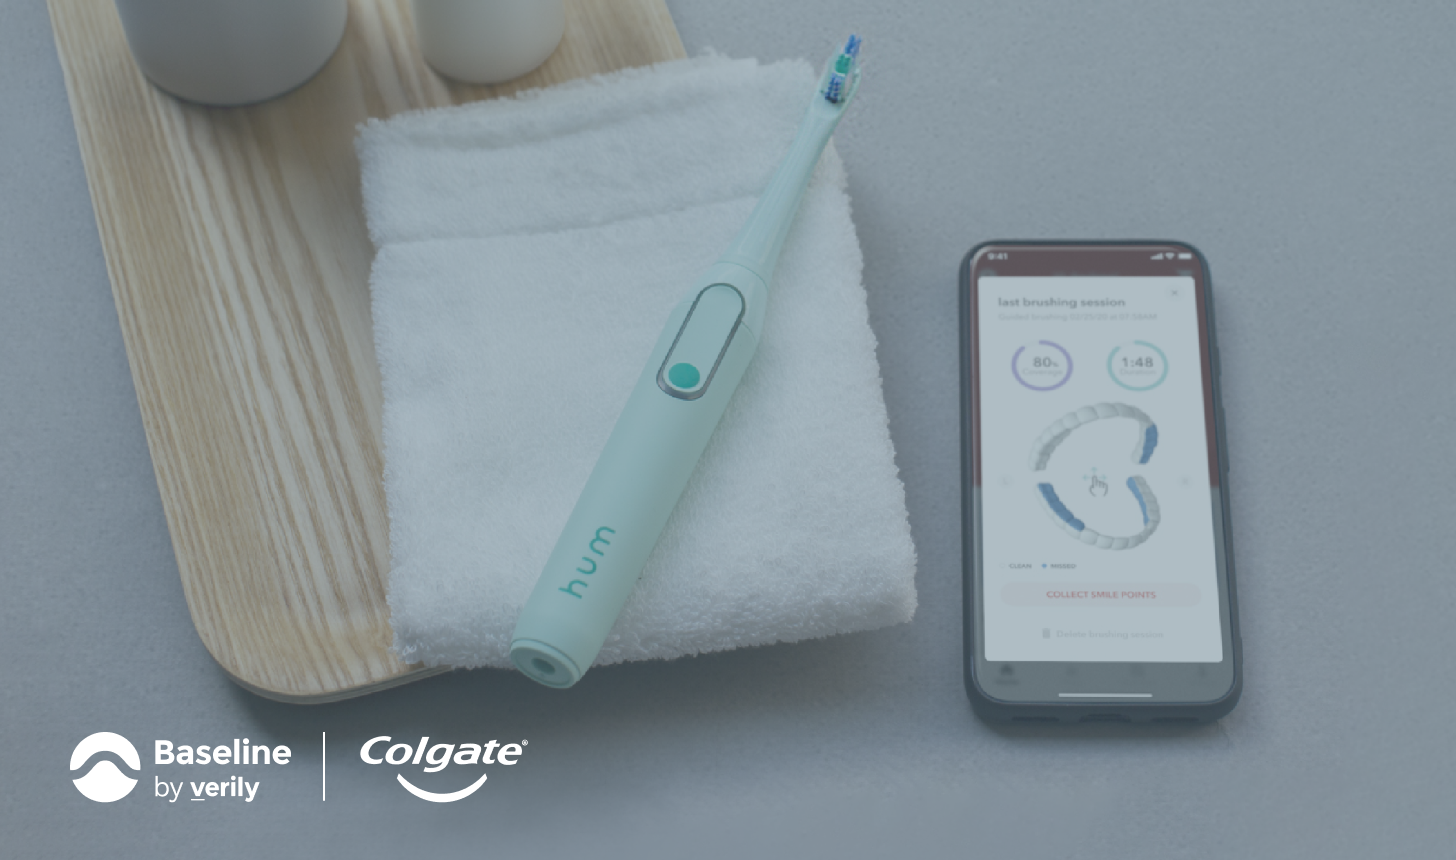 Colgate Taps Verily’s Baseline Platform for Oral Health Research